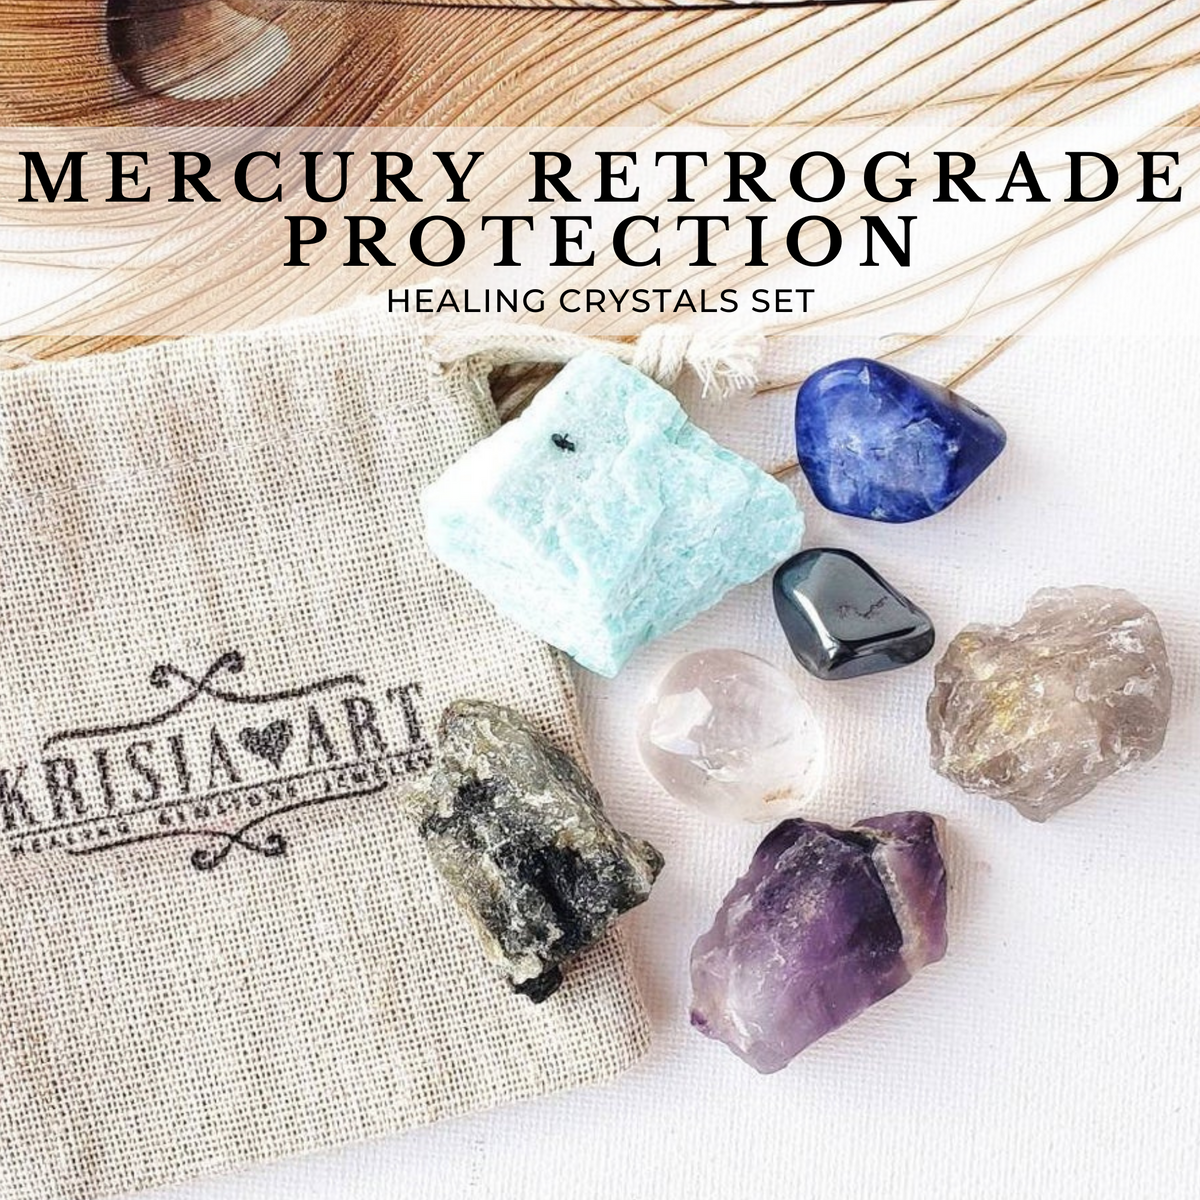 MERCURY RETROGRADE crystals set for protection during retrograde period. Sodalite, Labradorite, Smoky quartz, Amazonite, Hematite, Amethyst, Clear quartz